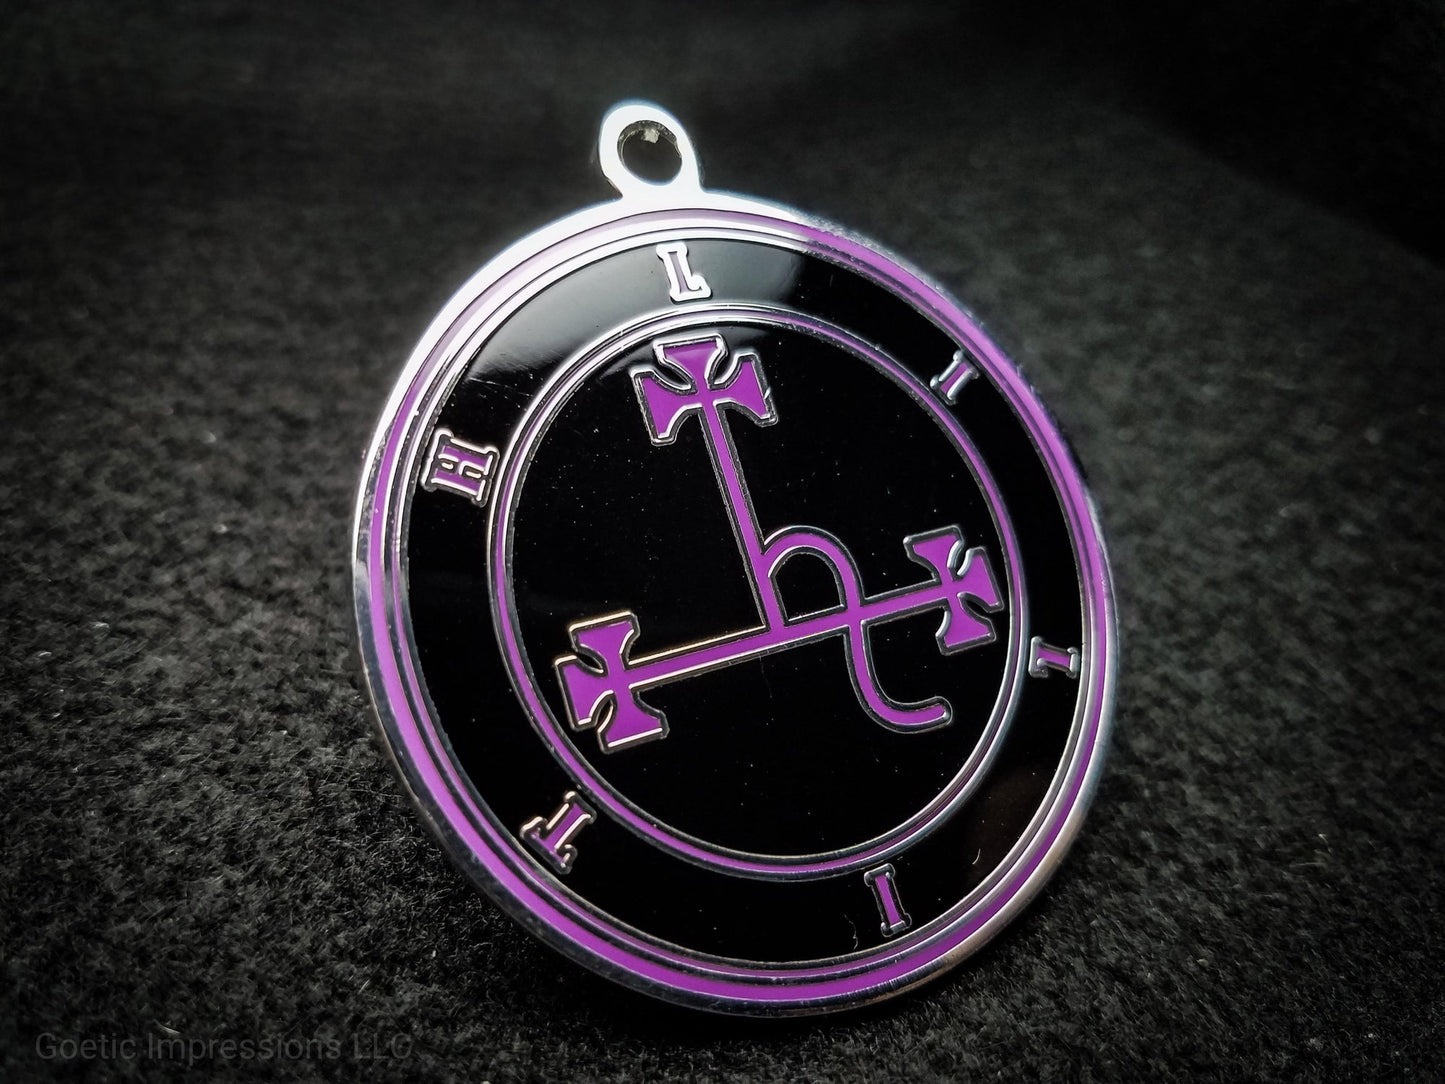 Purple and Silver Lilith sigil pendant